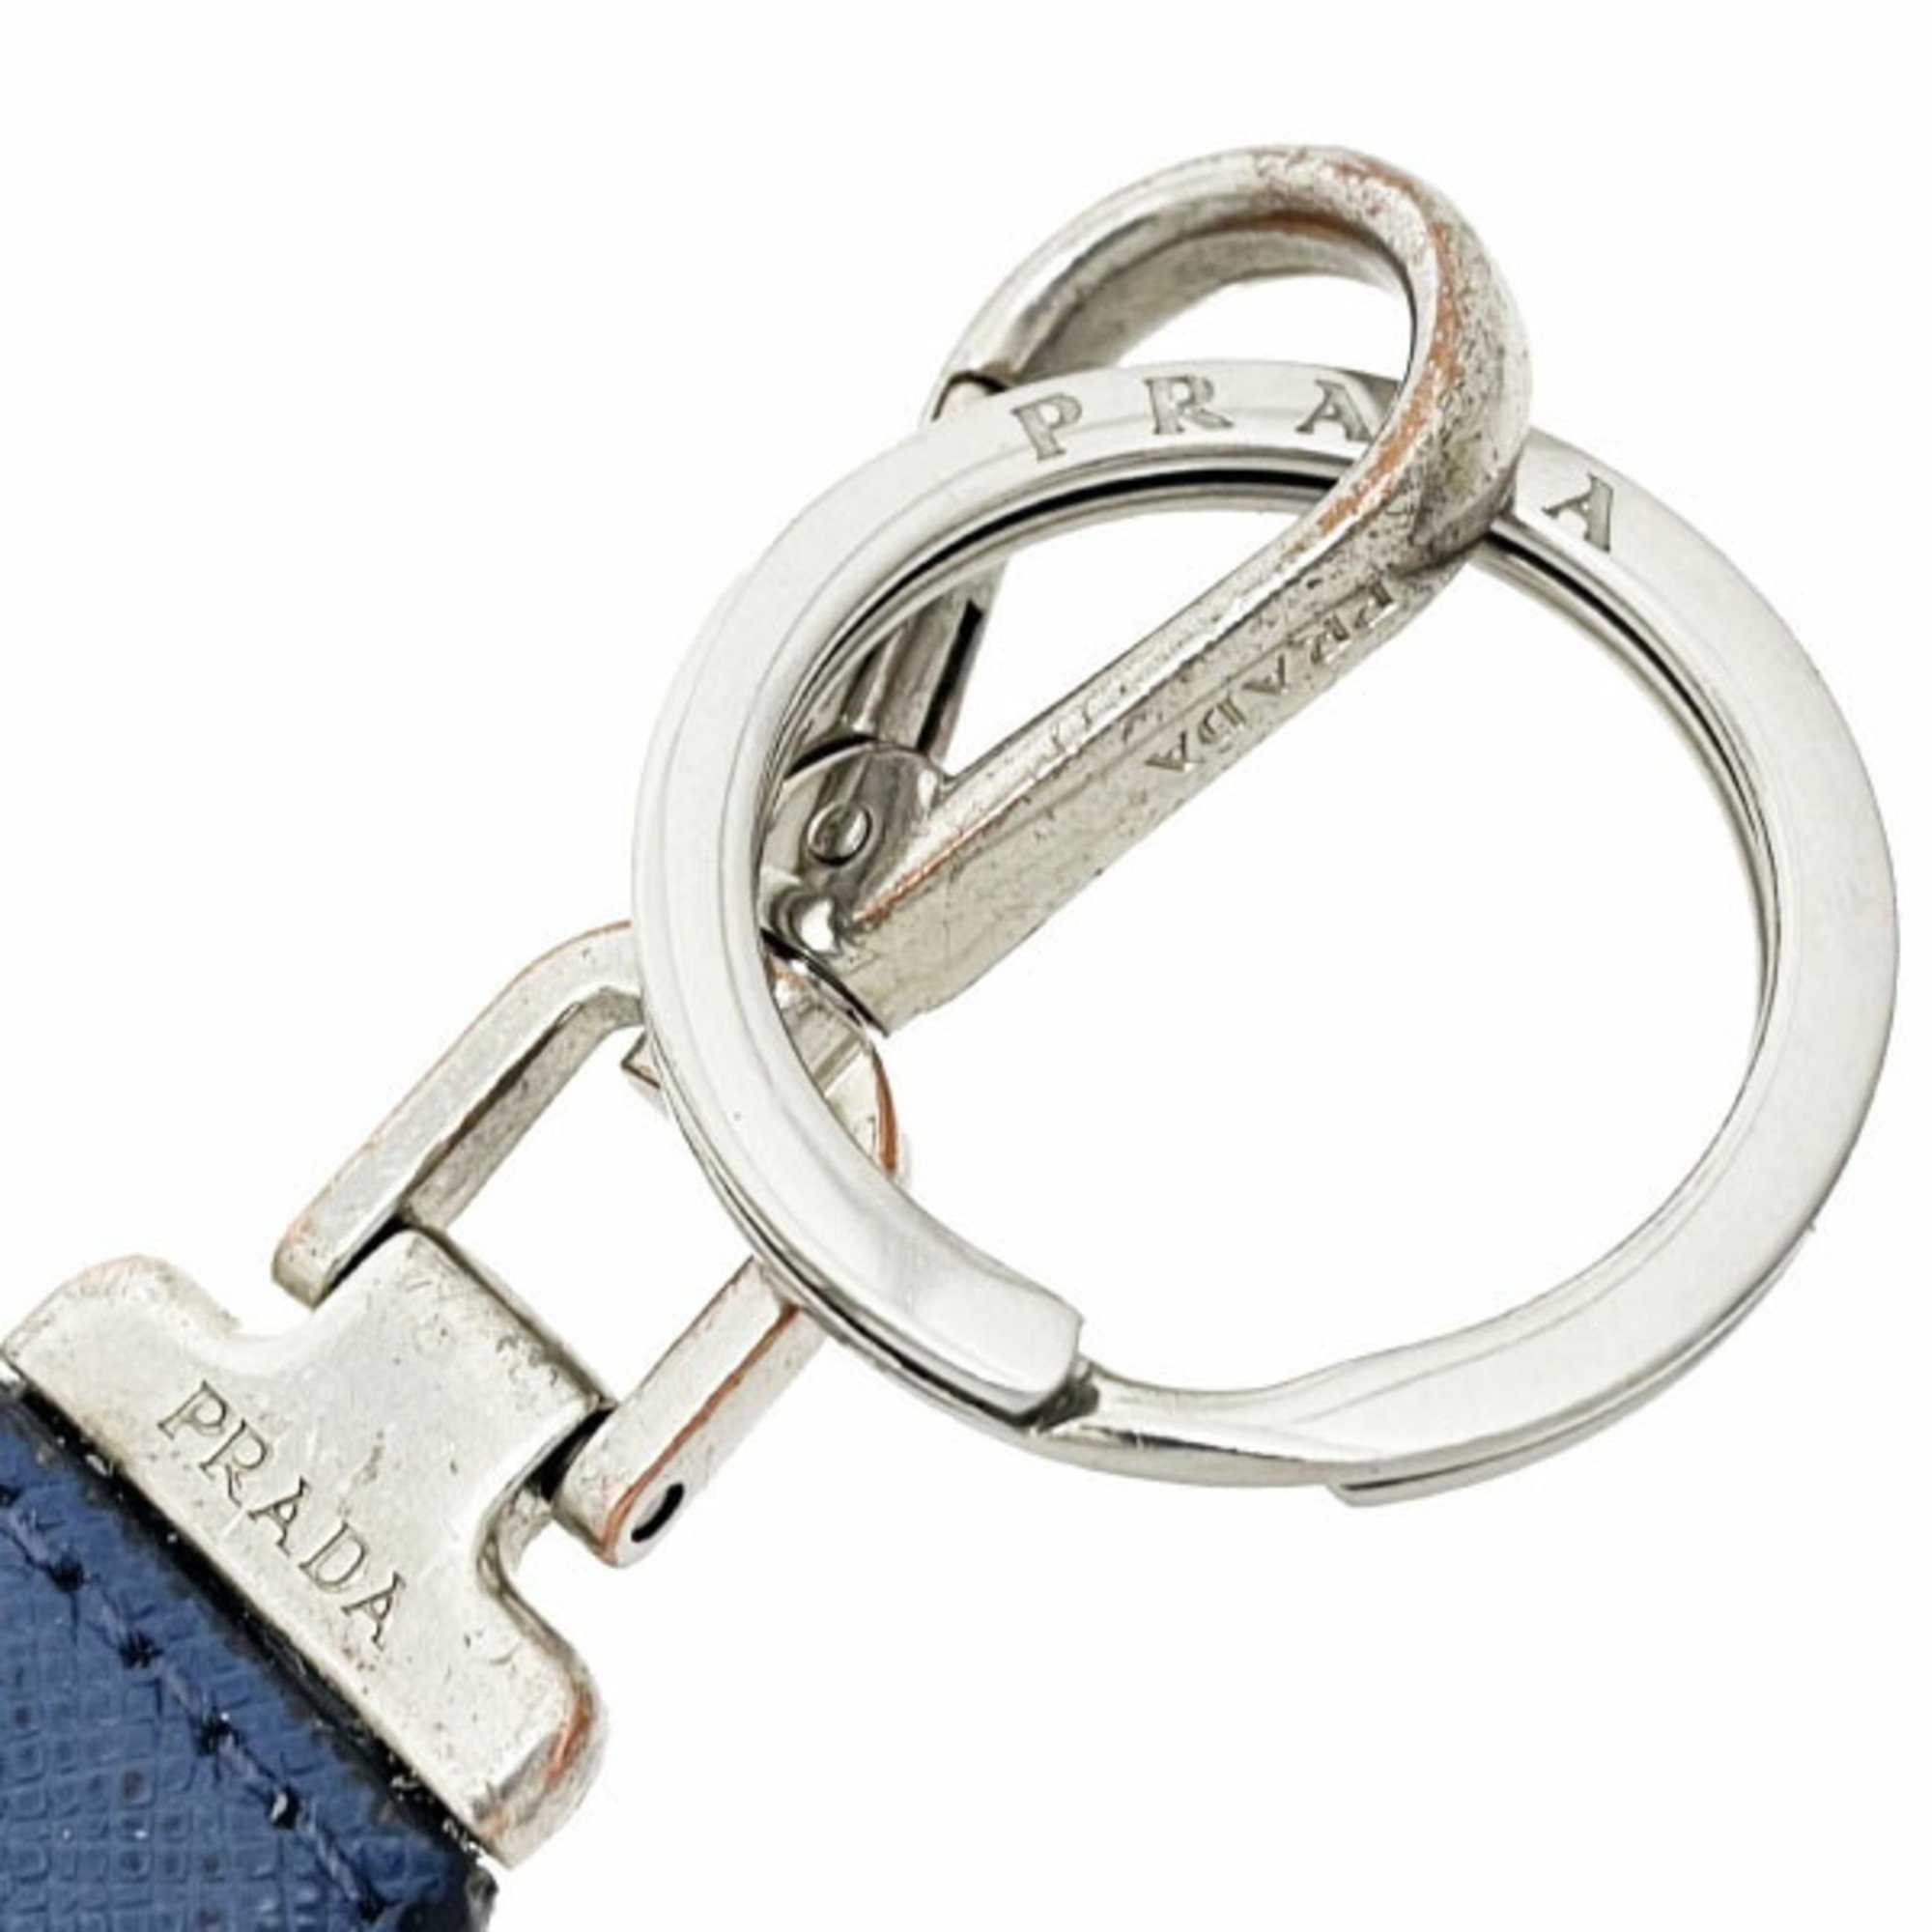 Prada Keychain Triangle Key Ring Saffiano Leather Blue 2PP0 PRADA Plate Hook Charm Bag BLUETTE TT-13092